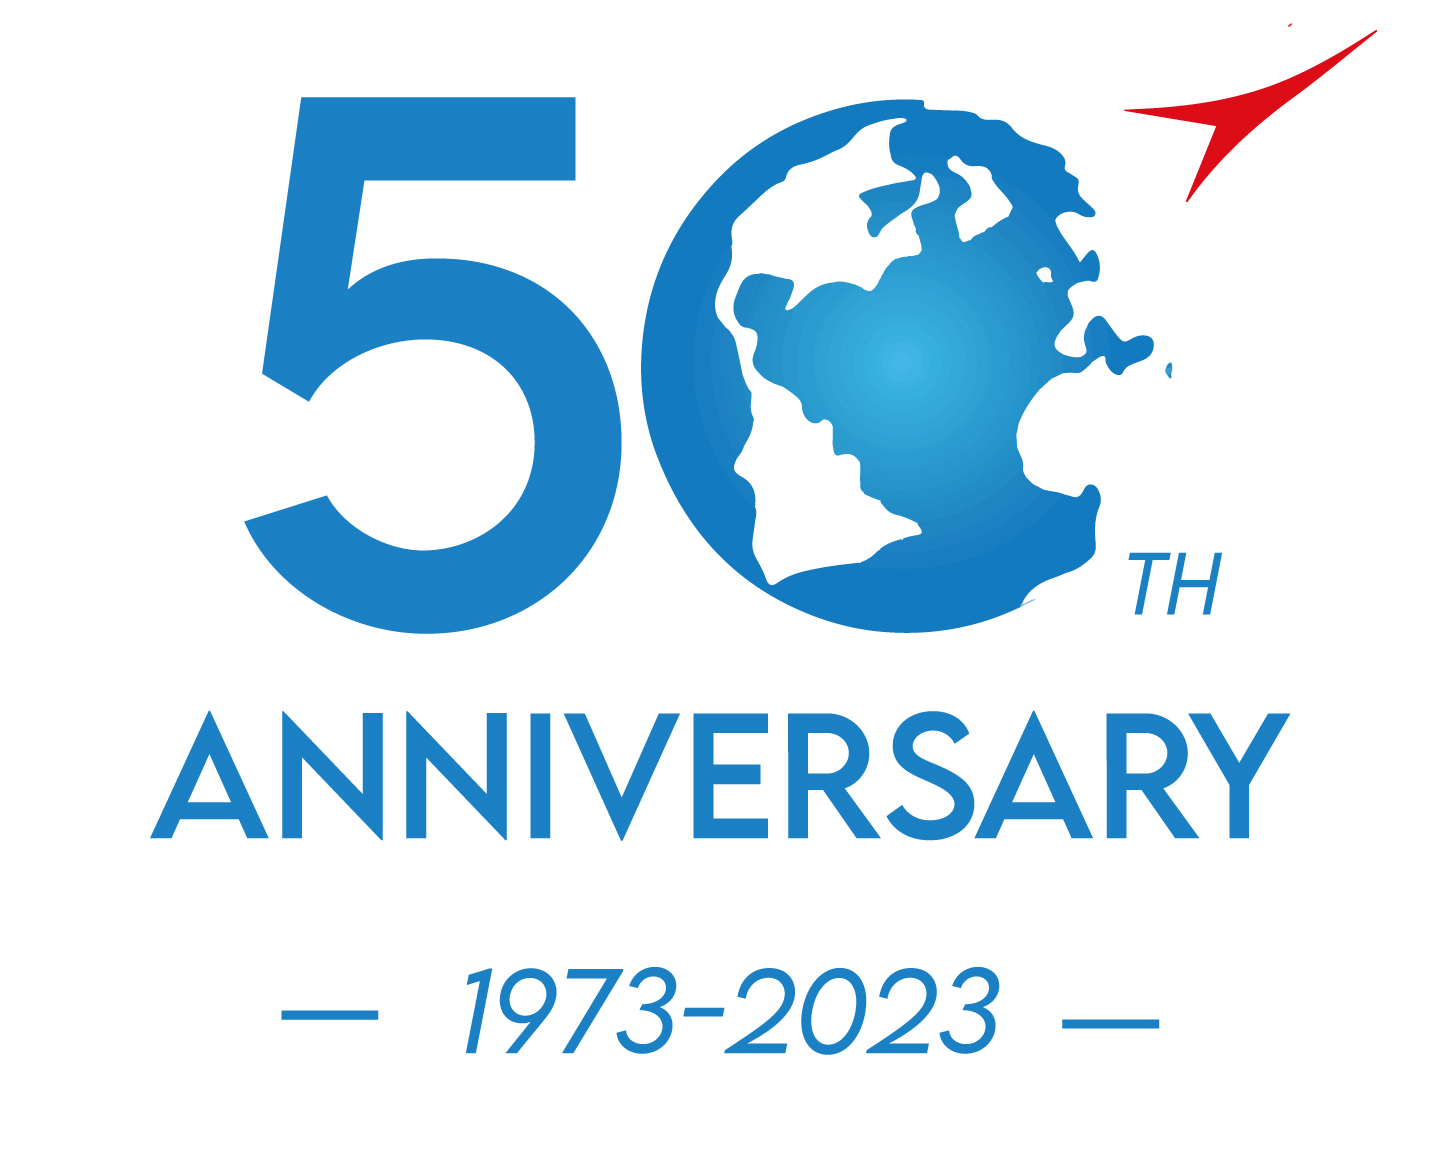 Sepro 50周年纪念 - 2023年